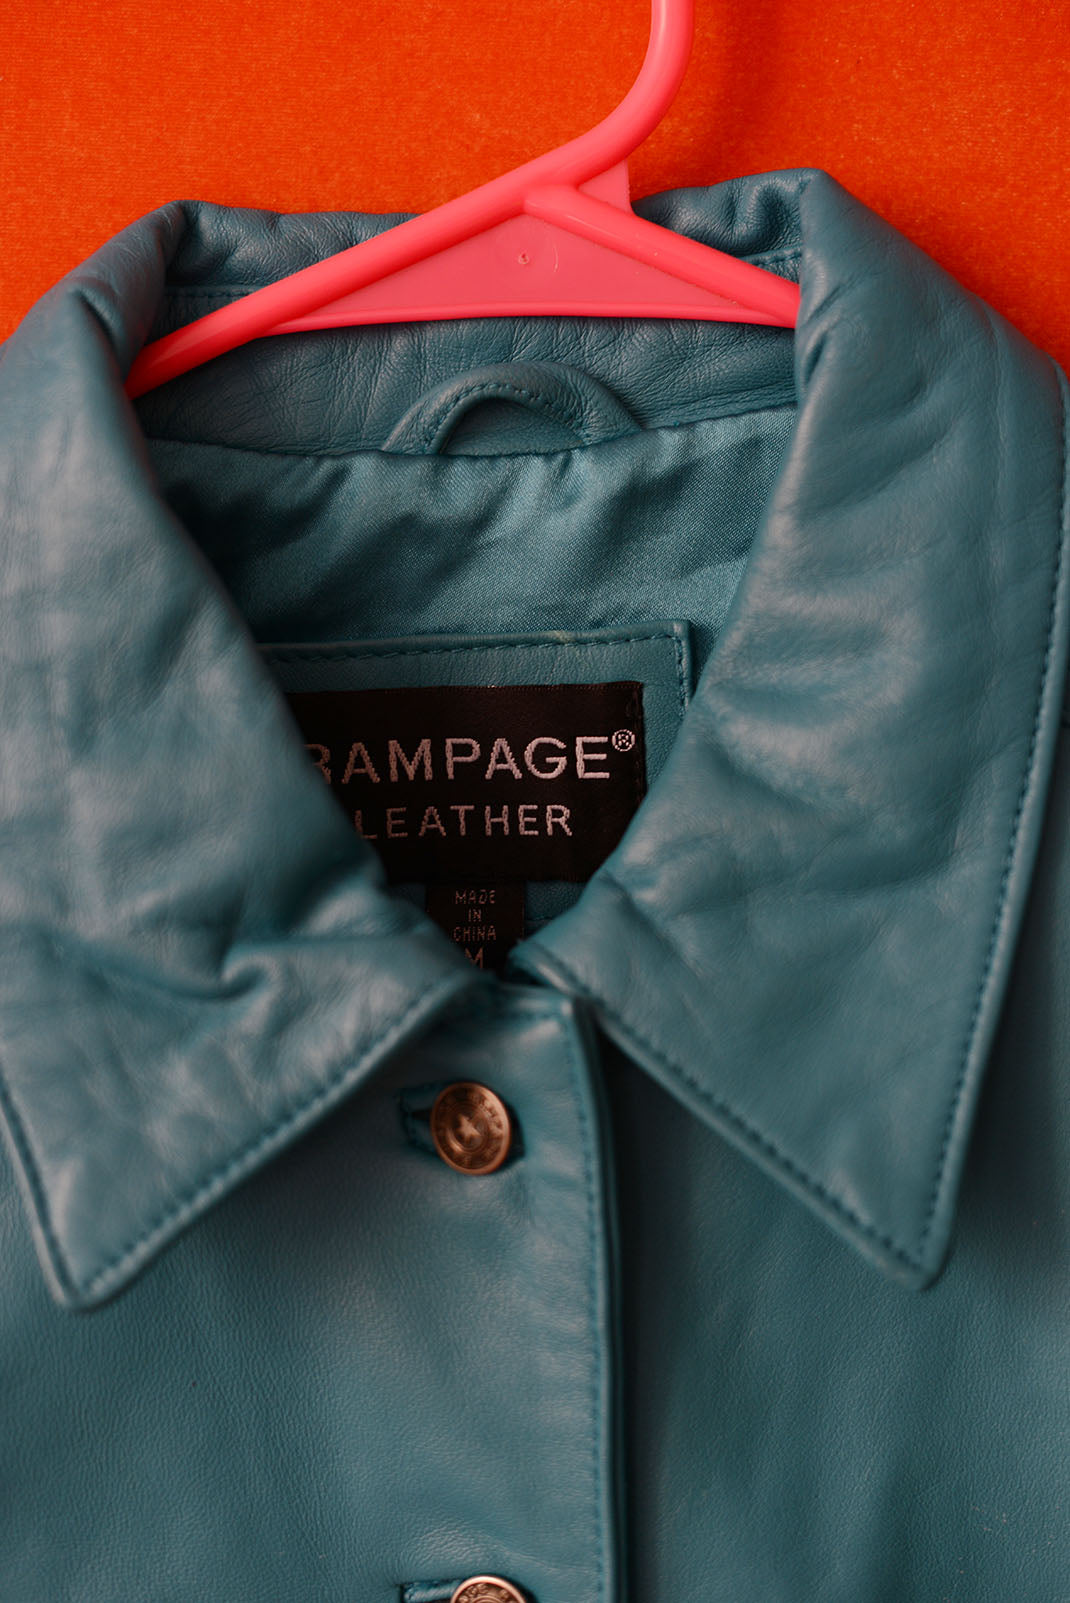 RAMPAGE leather jacket